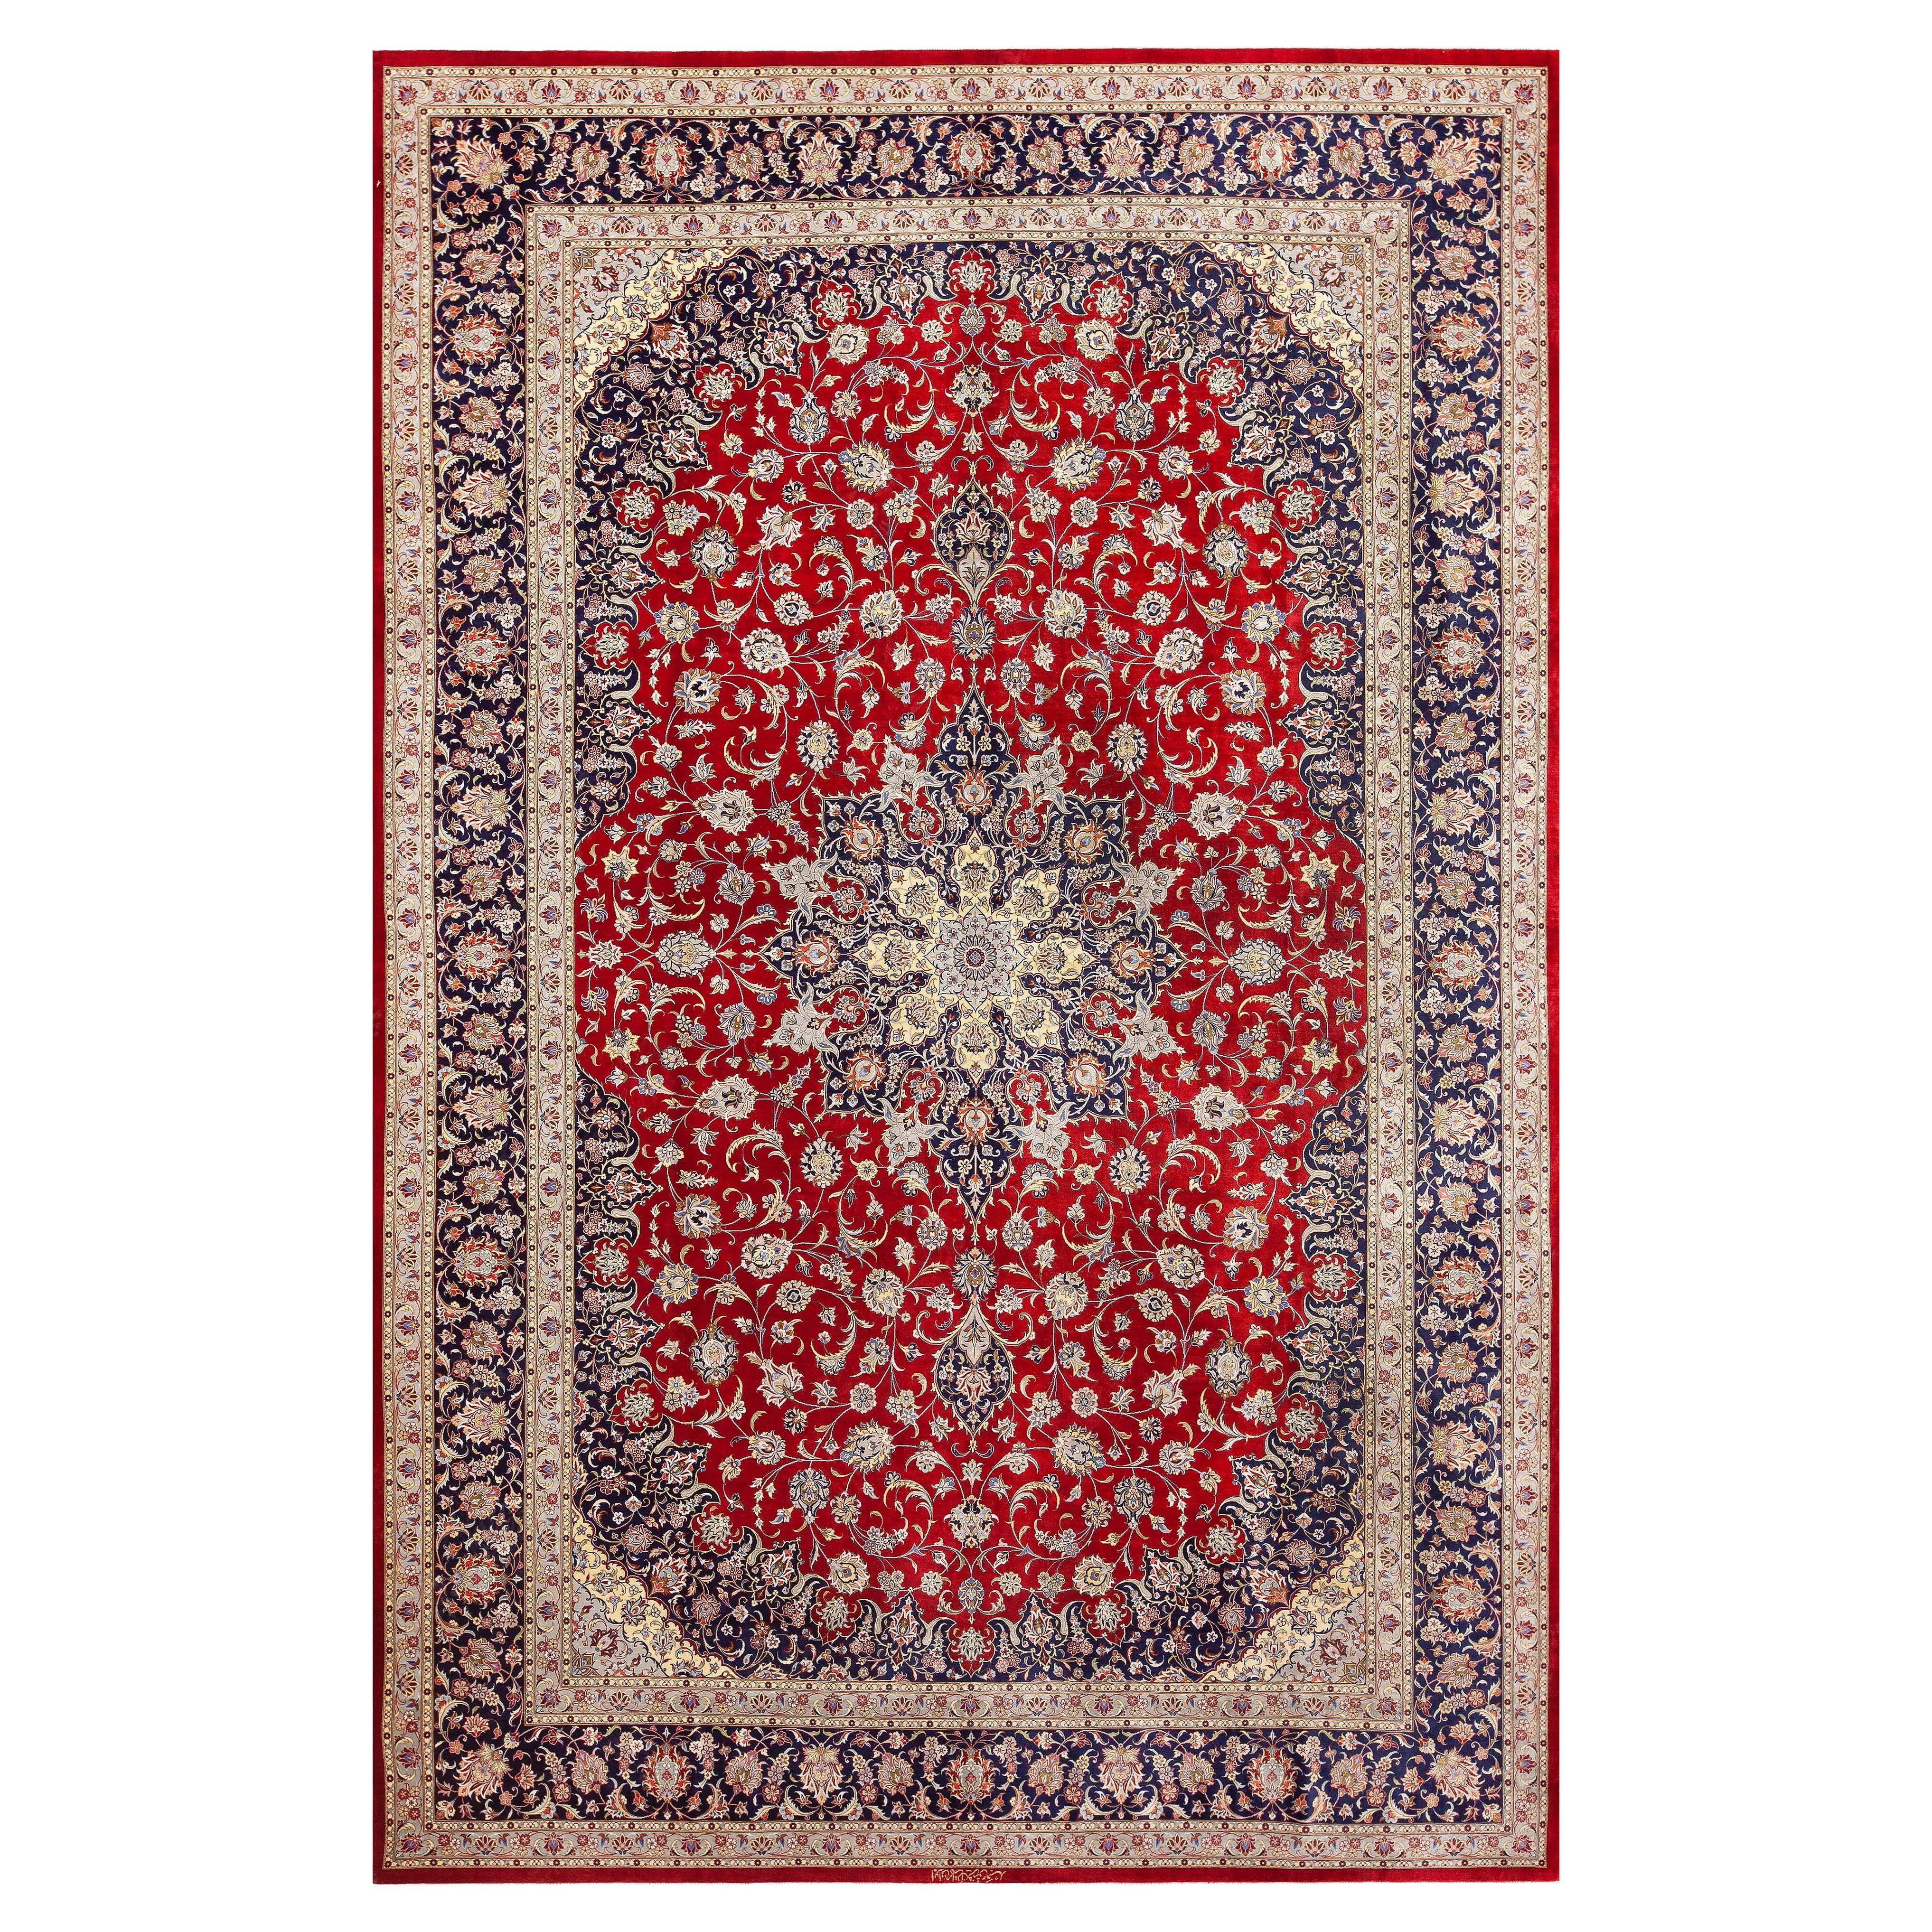 What is Kashan rug?